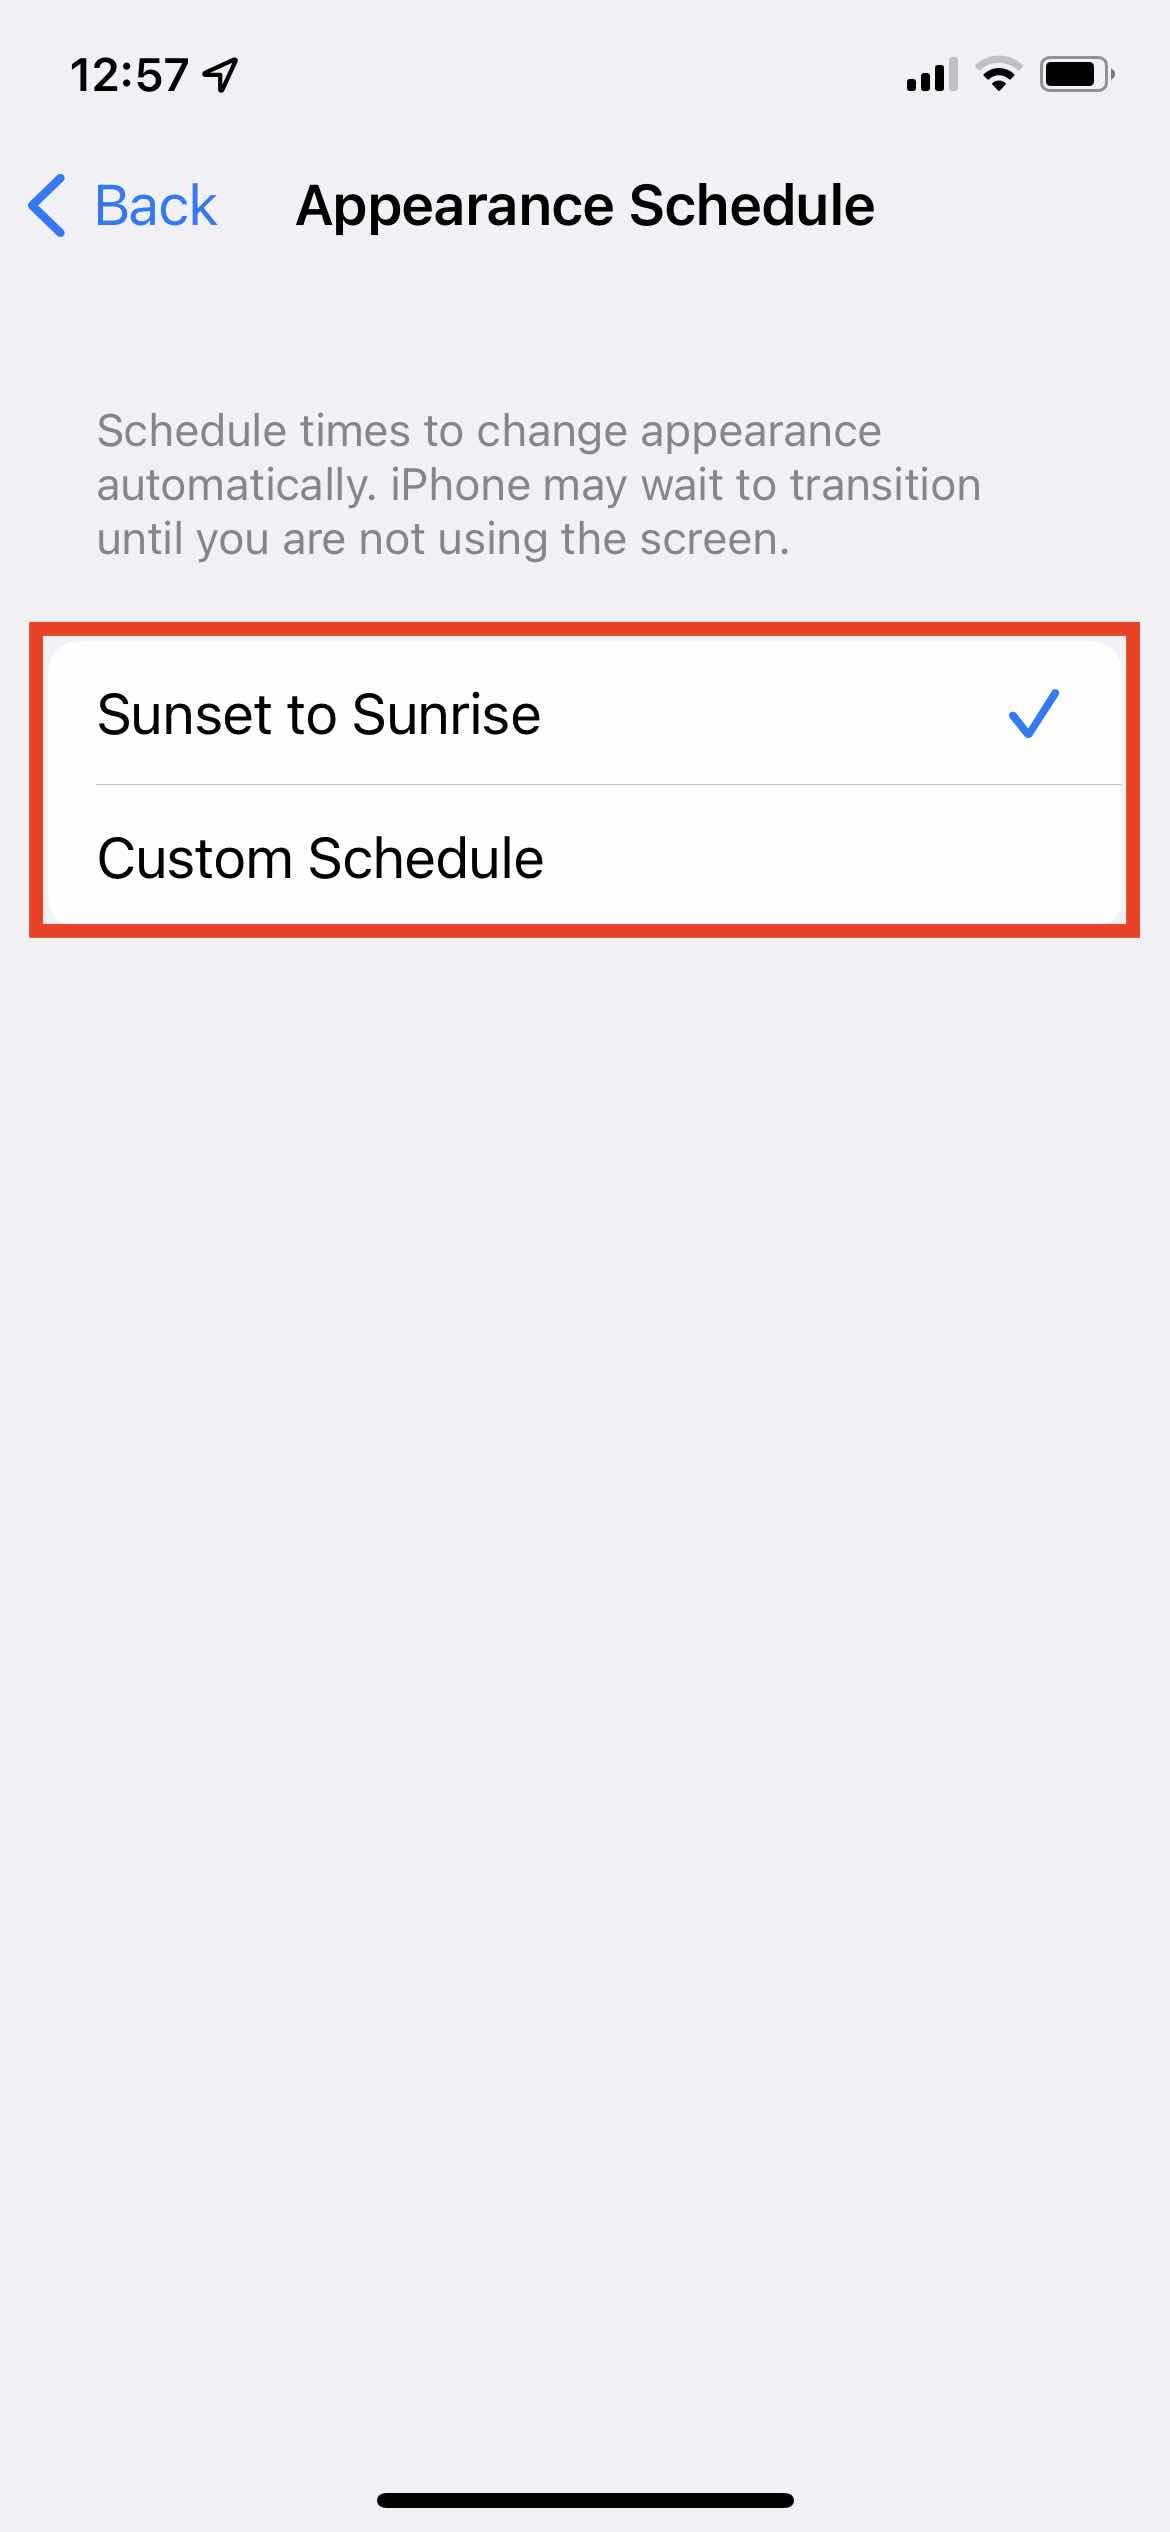 Custom Schedule to enable dark mode